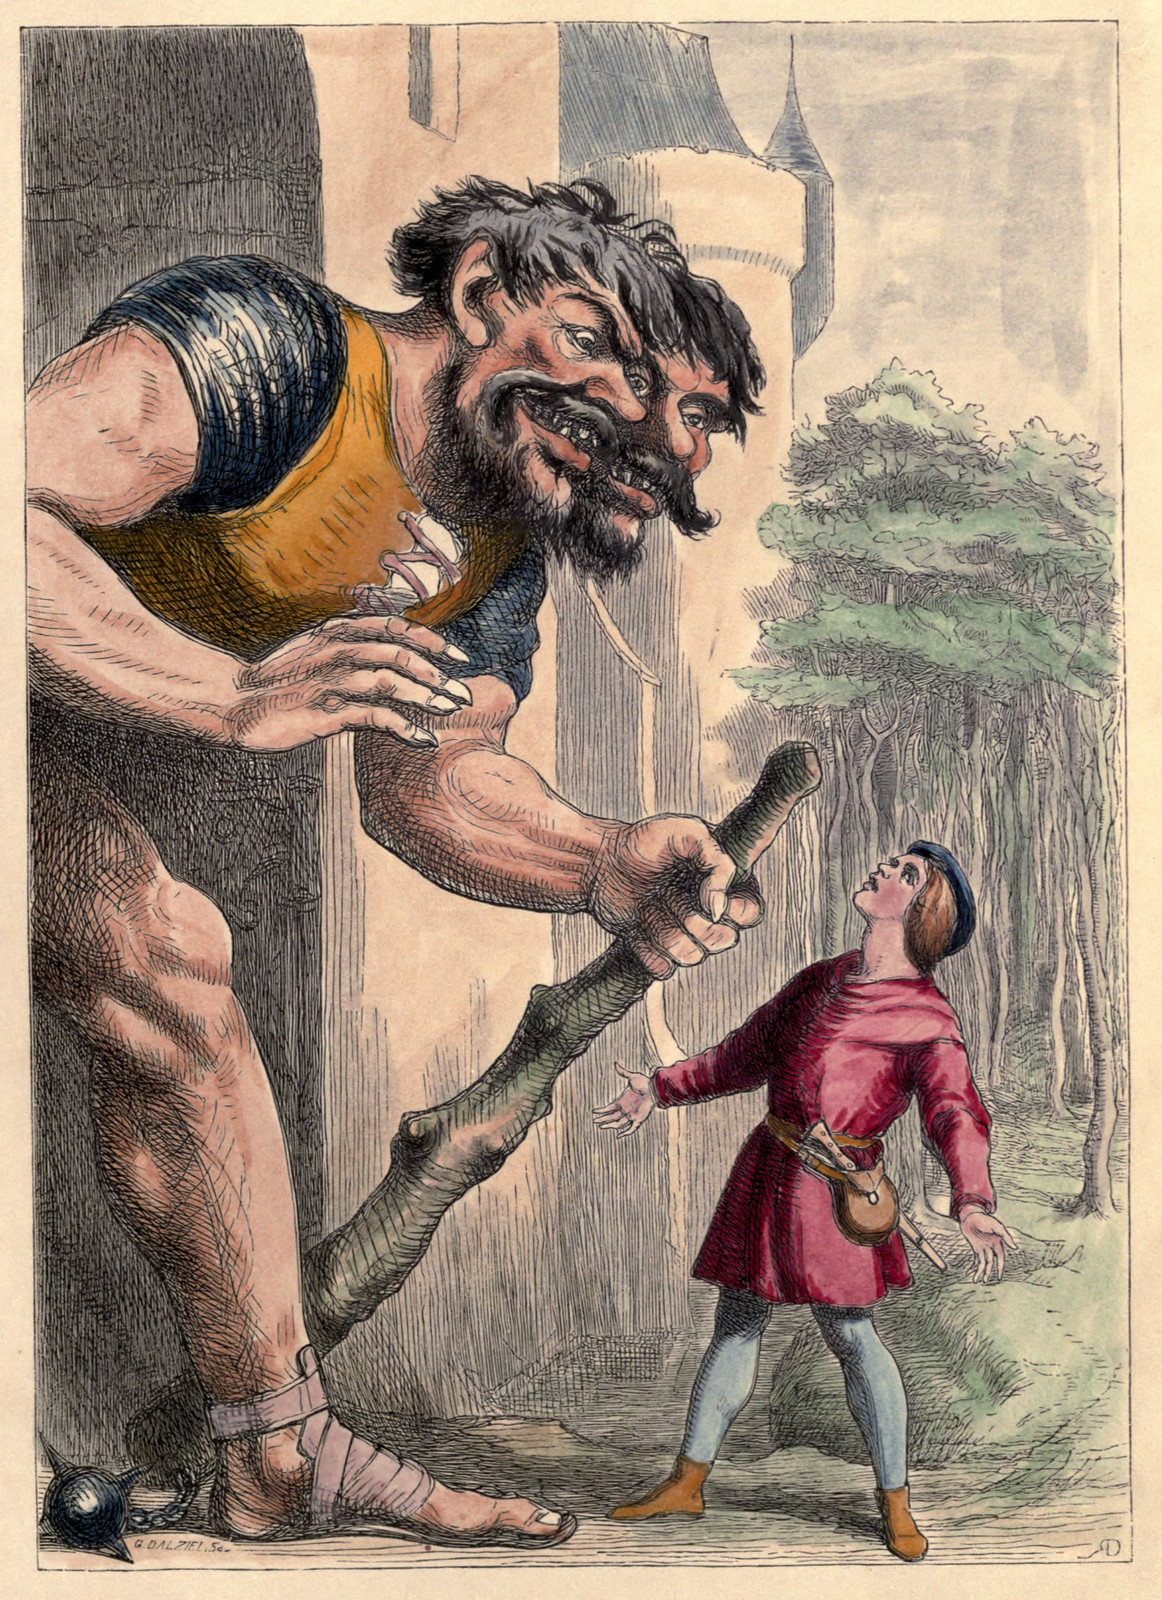 Richard Doyle - The Story of Jack and the Giant, 1851, Illustration 06